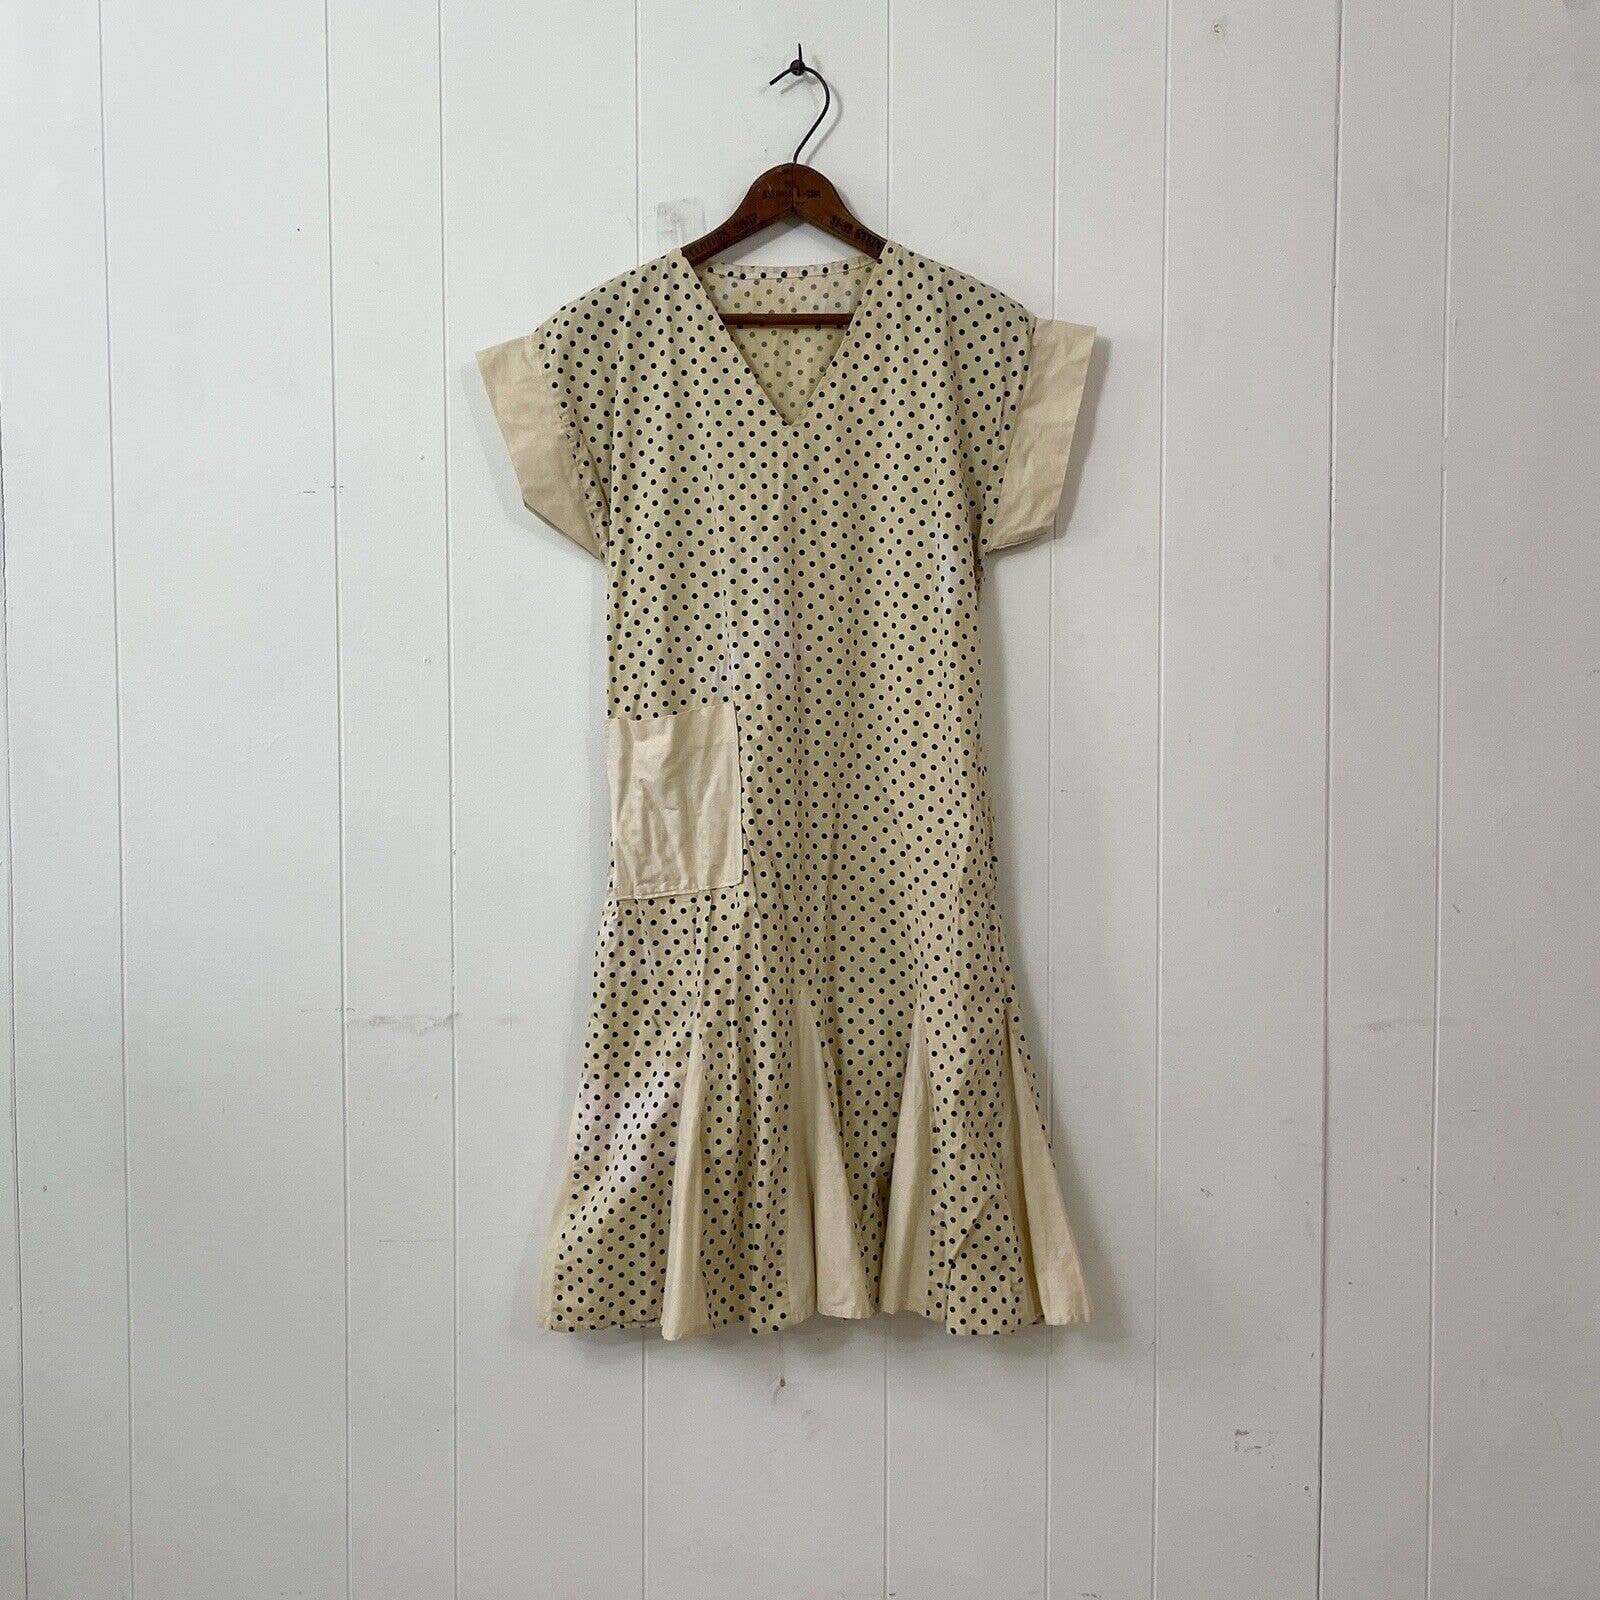 Antique Polka Dot Cotton Waist Day Dress Godets - Etsy